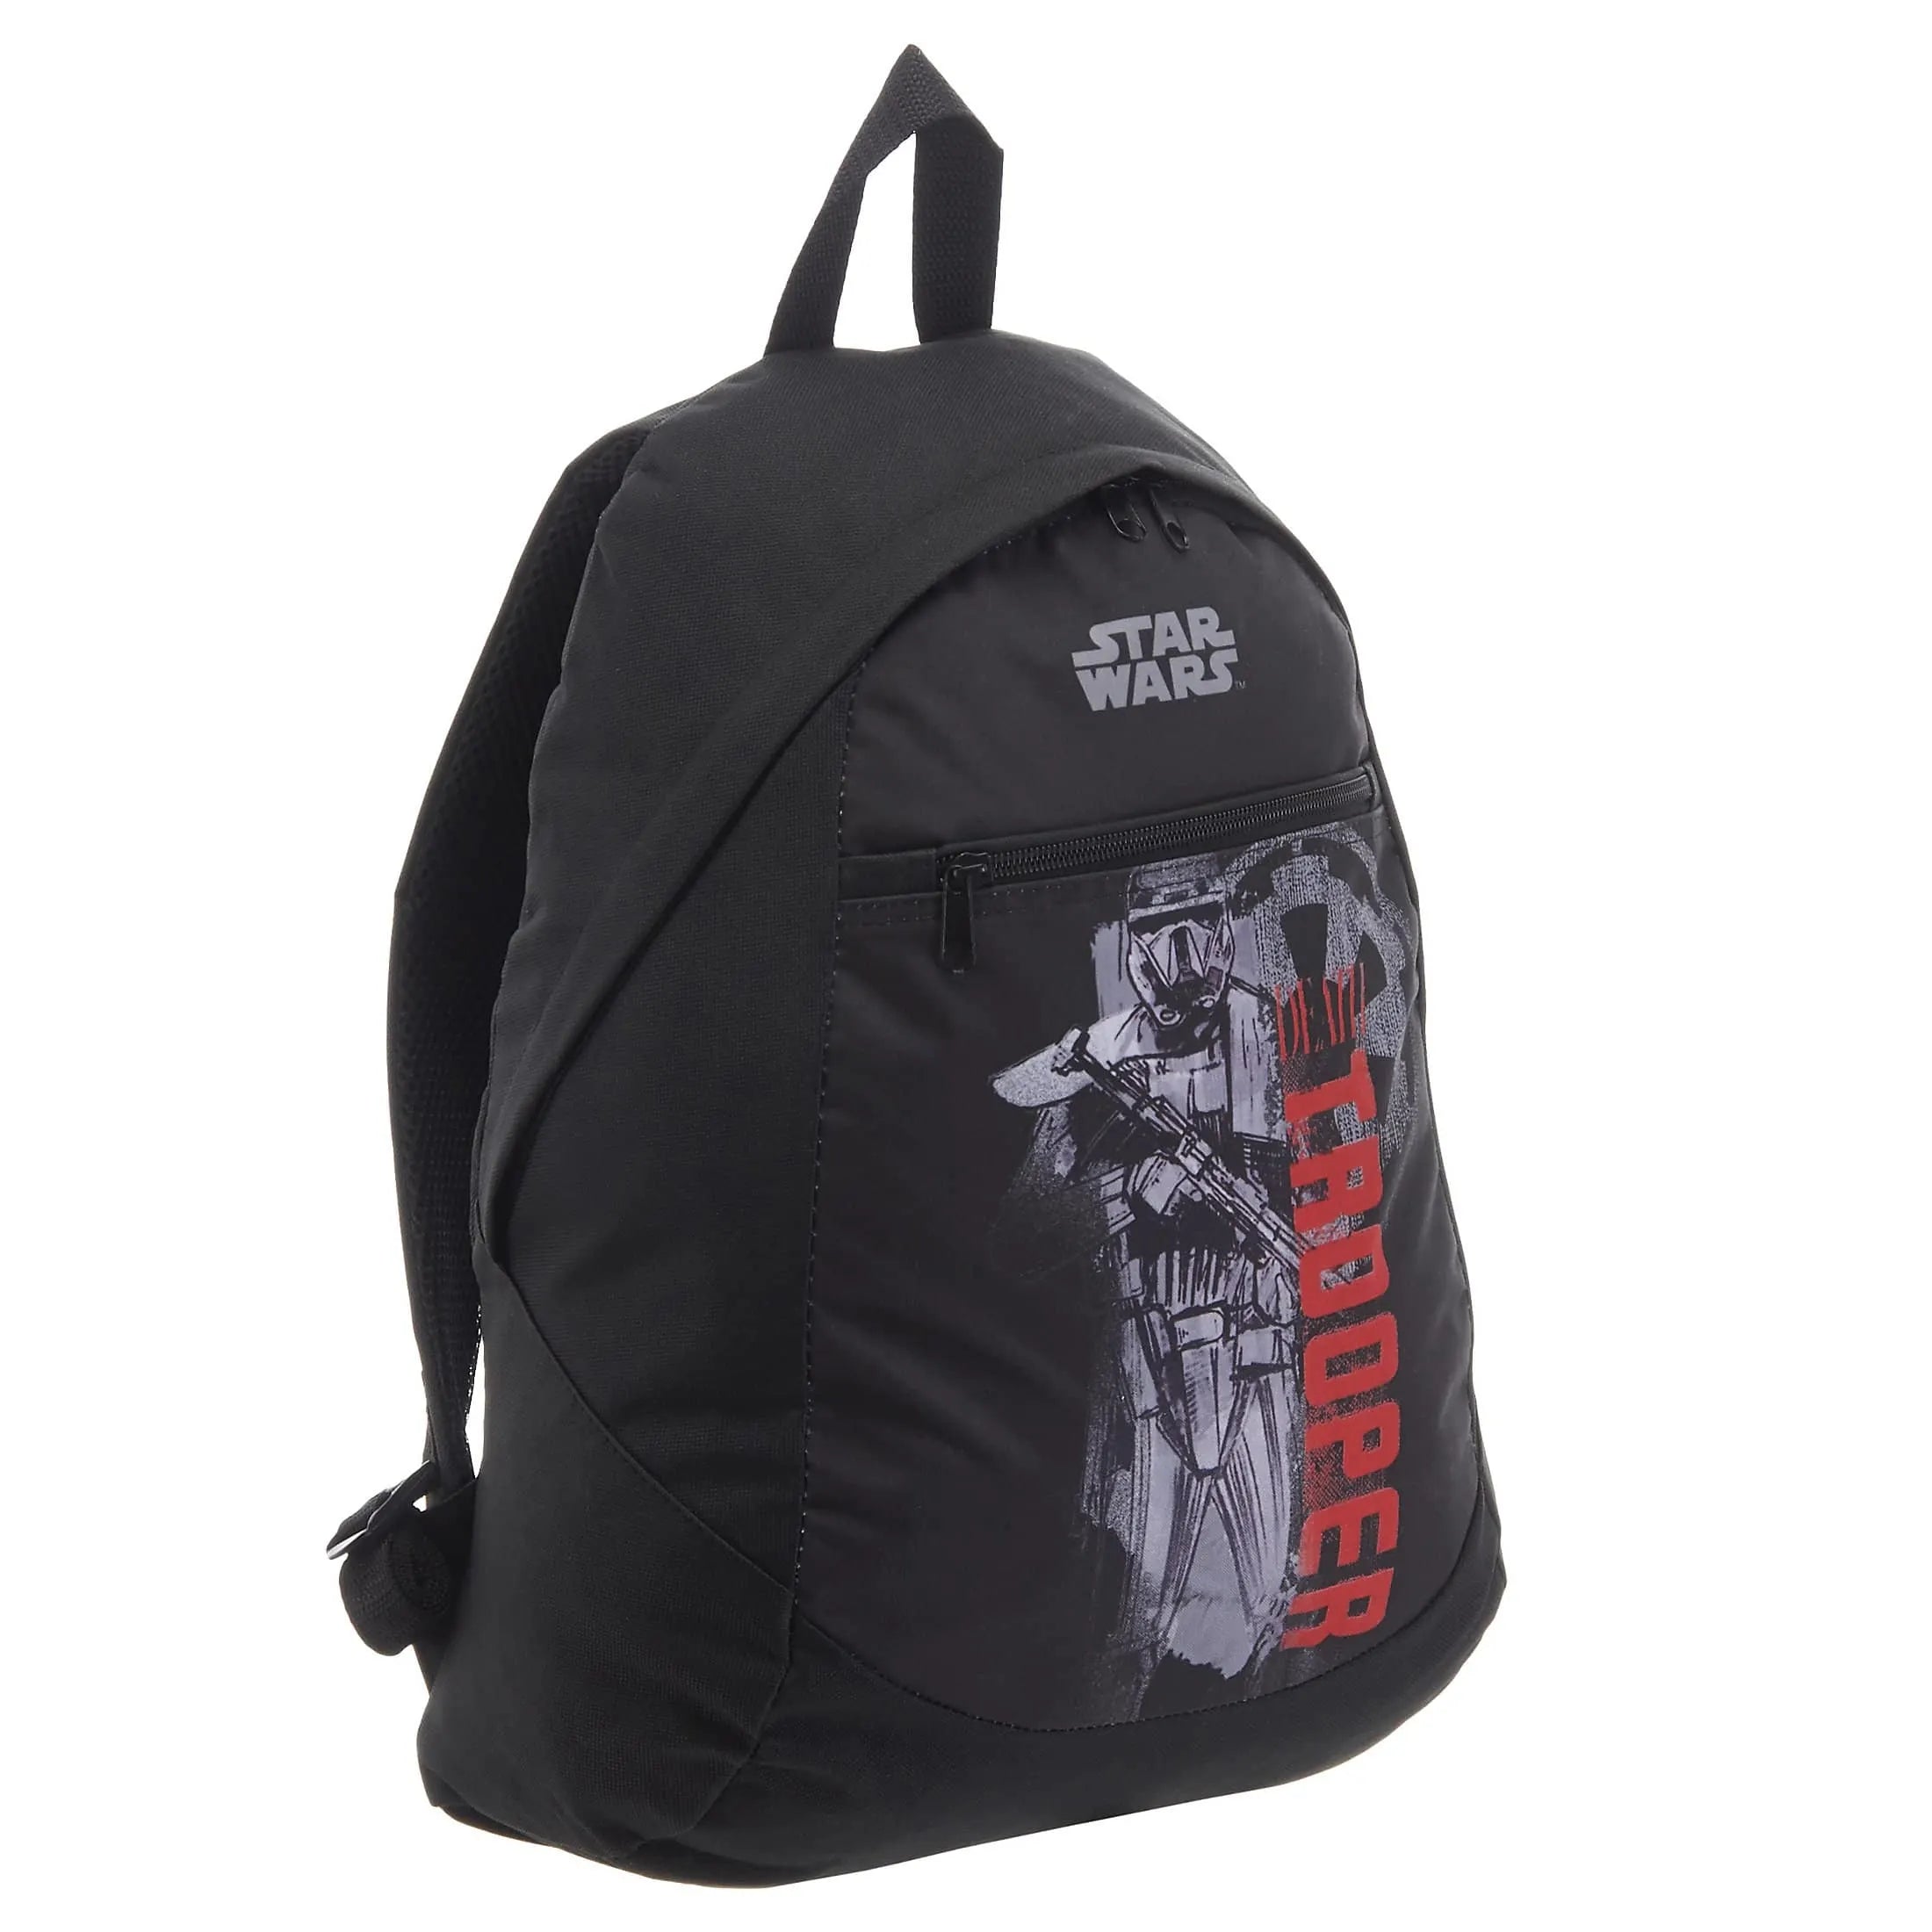 Fabrizio Starwars children's backpack 42 cm - Deathtrooper